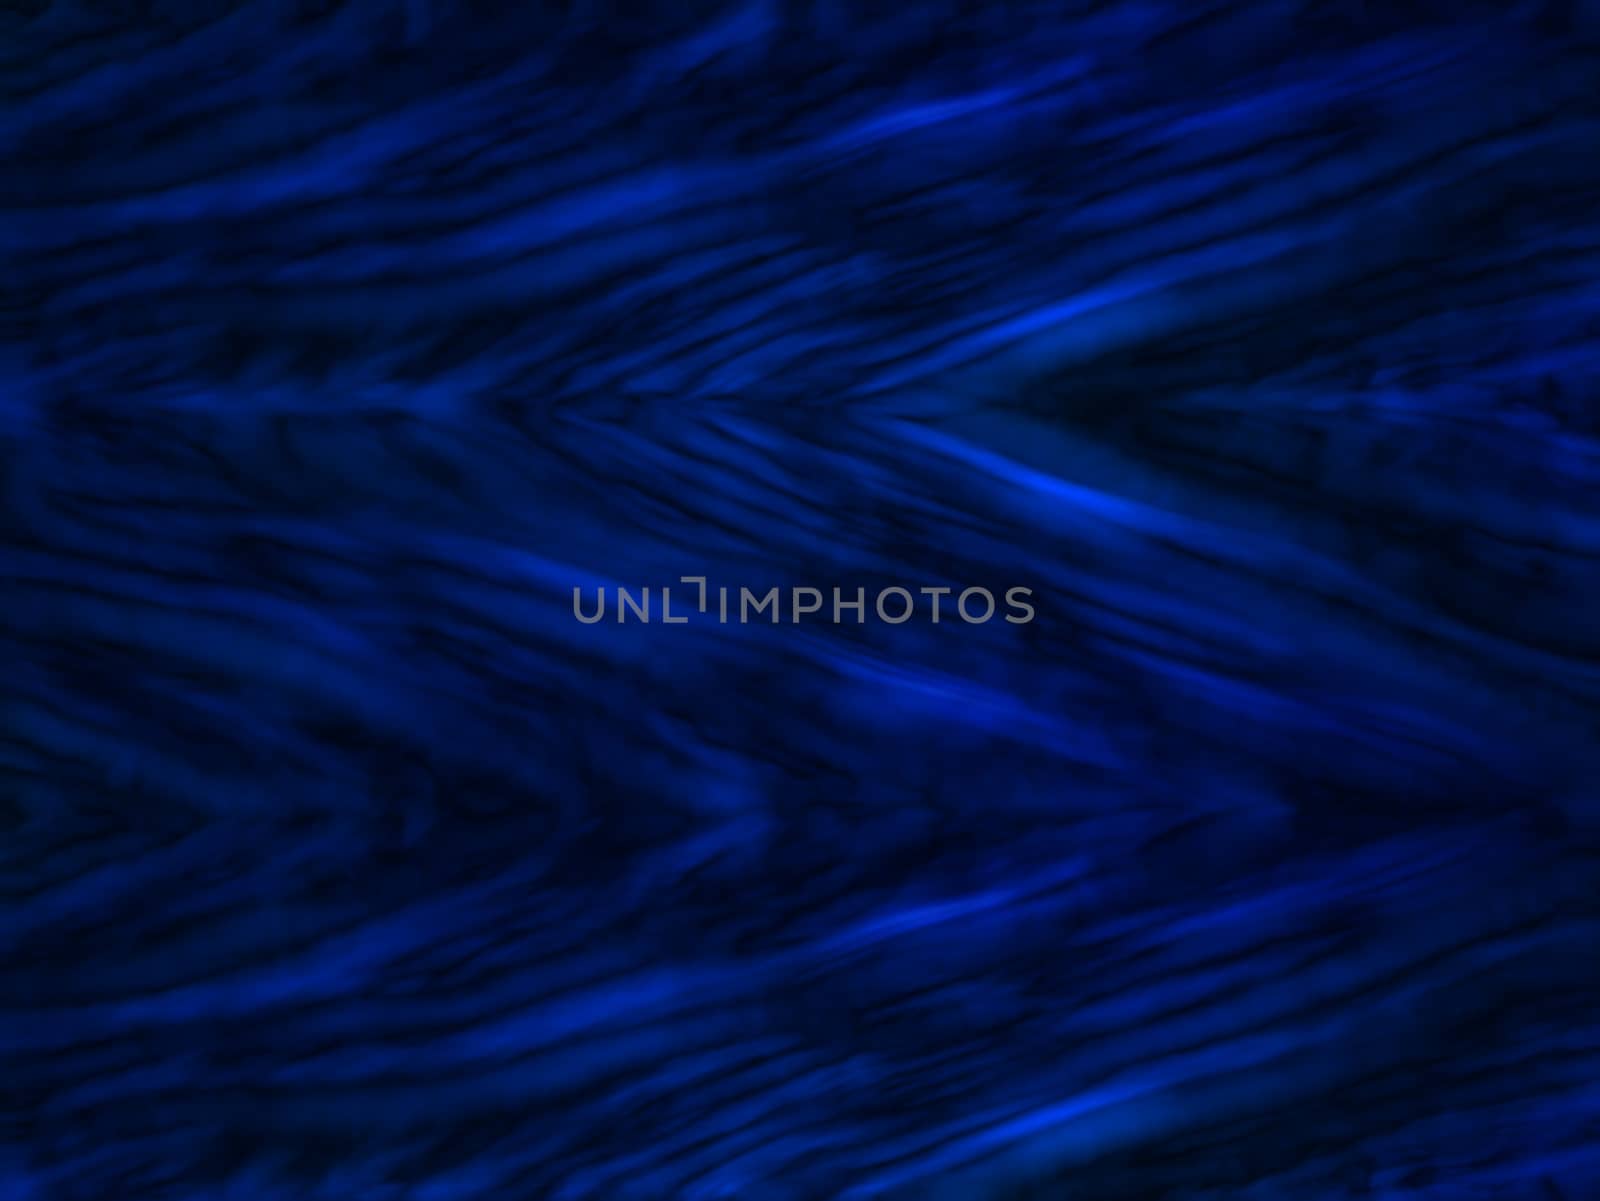 Dark blue abstraction by Krakatuk